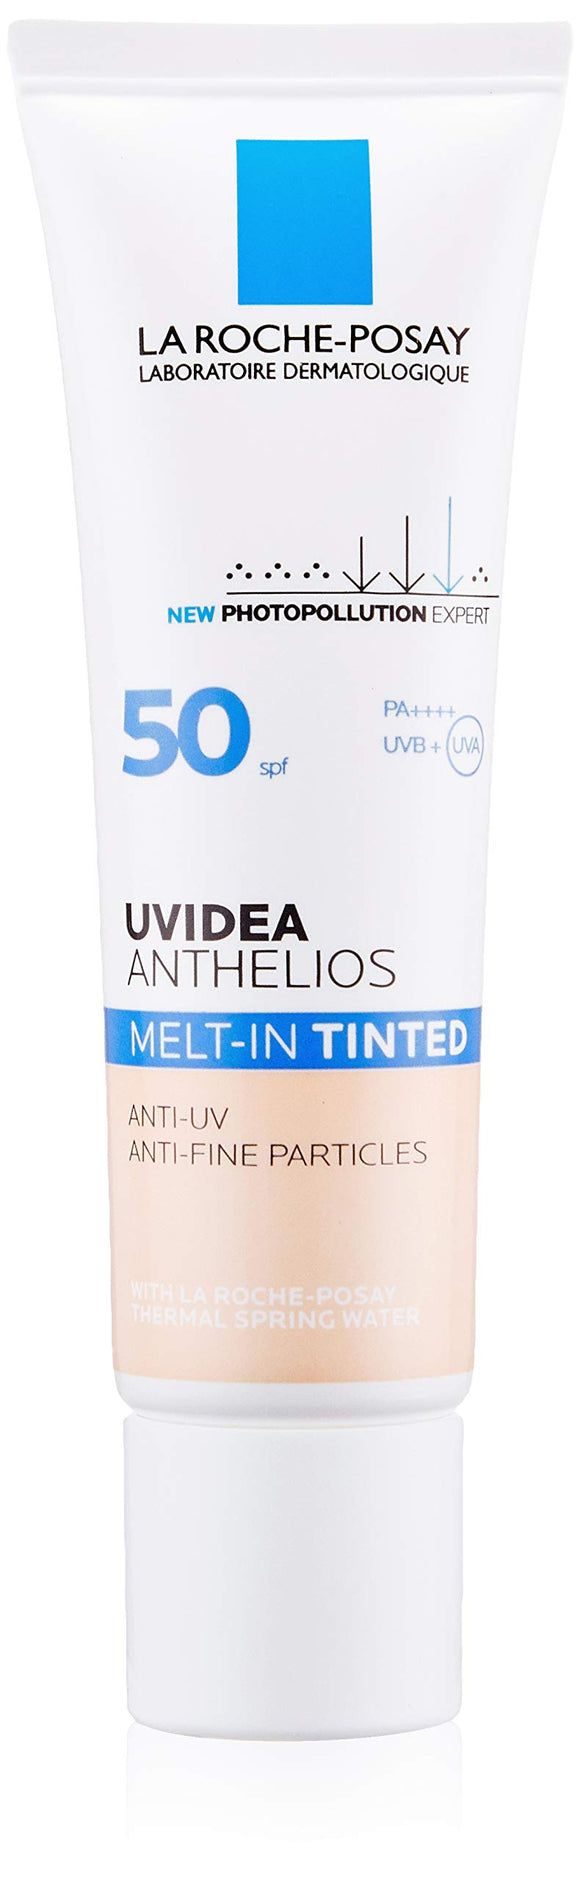 La Roche-Posay [Sunscreen/makeup base] UV Idea XL tint SPF50/PA++++ 30mL single item with color